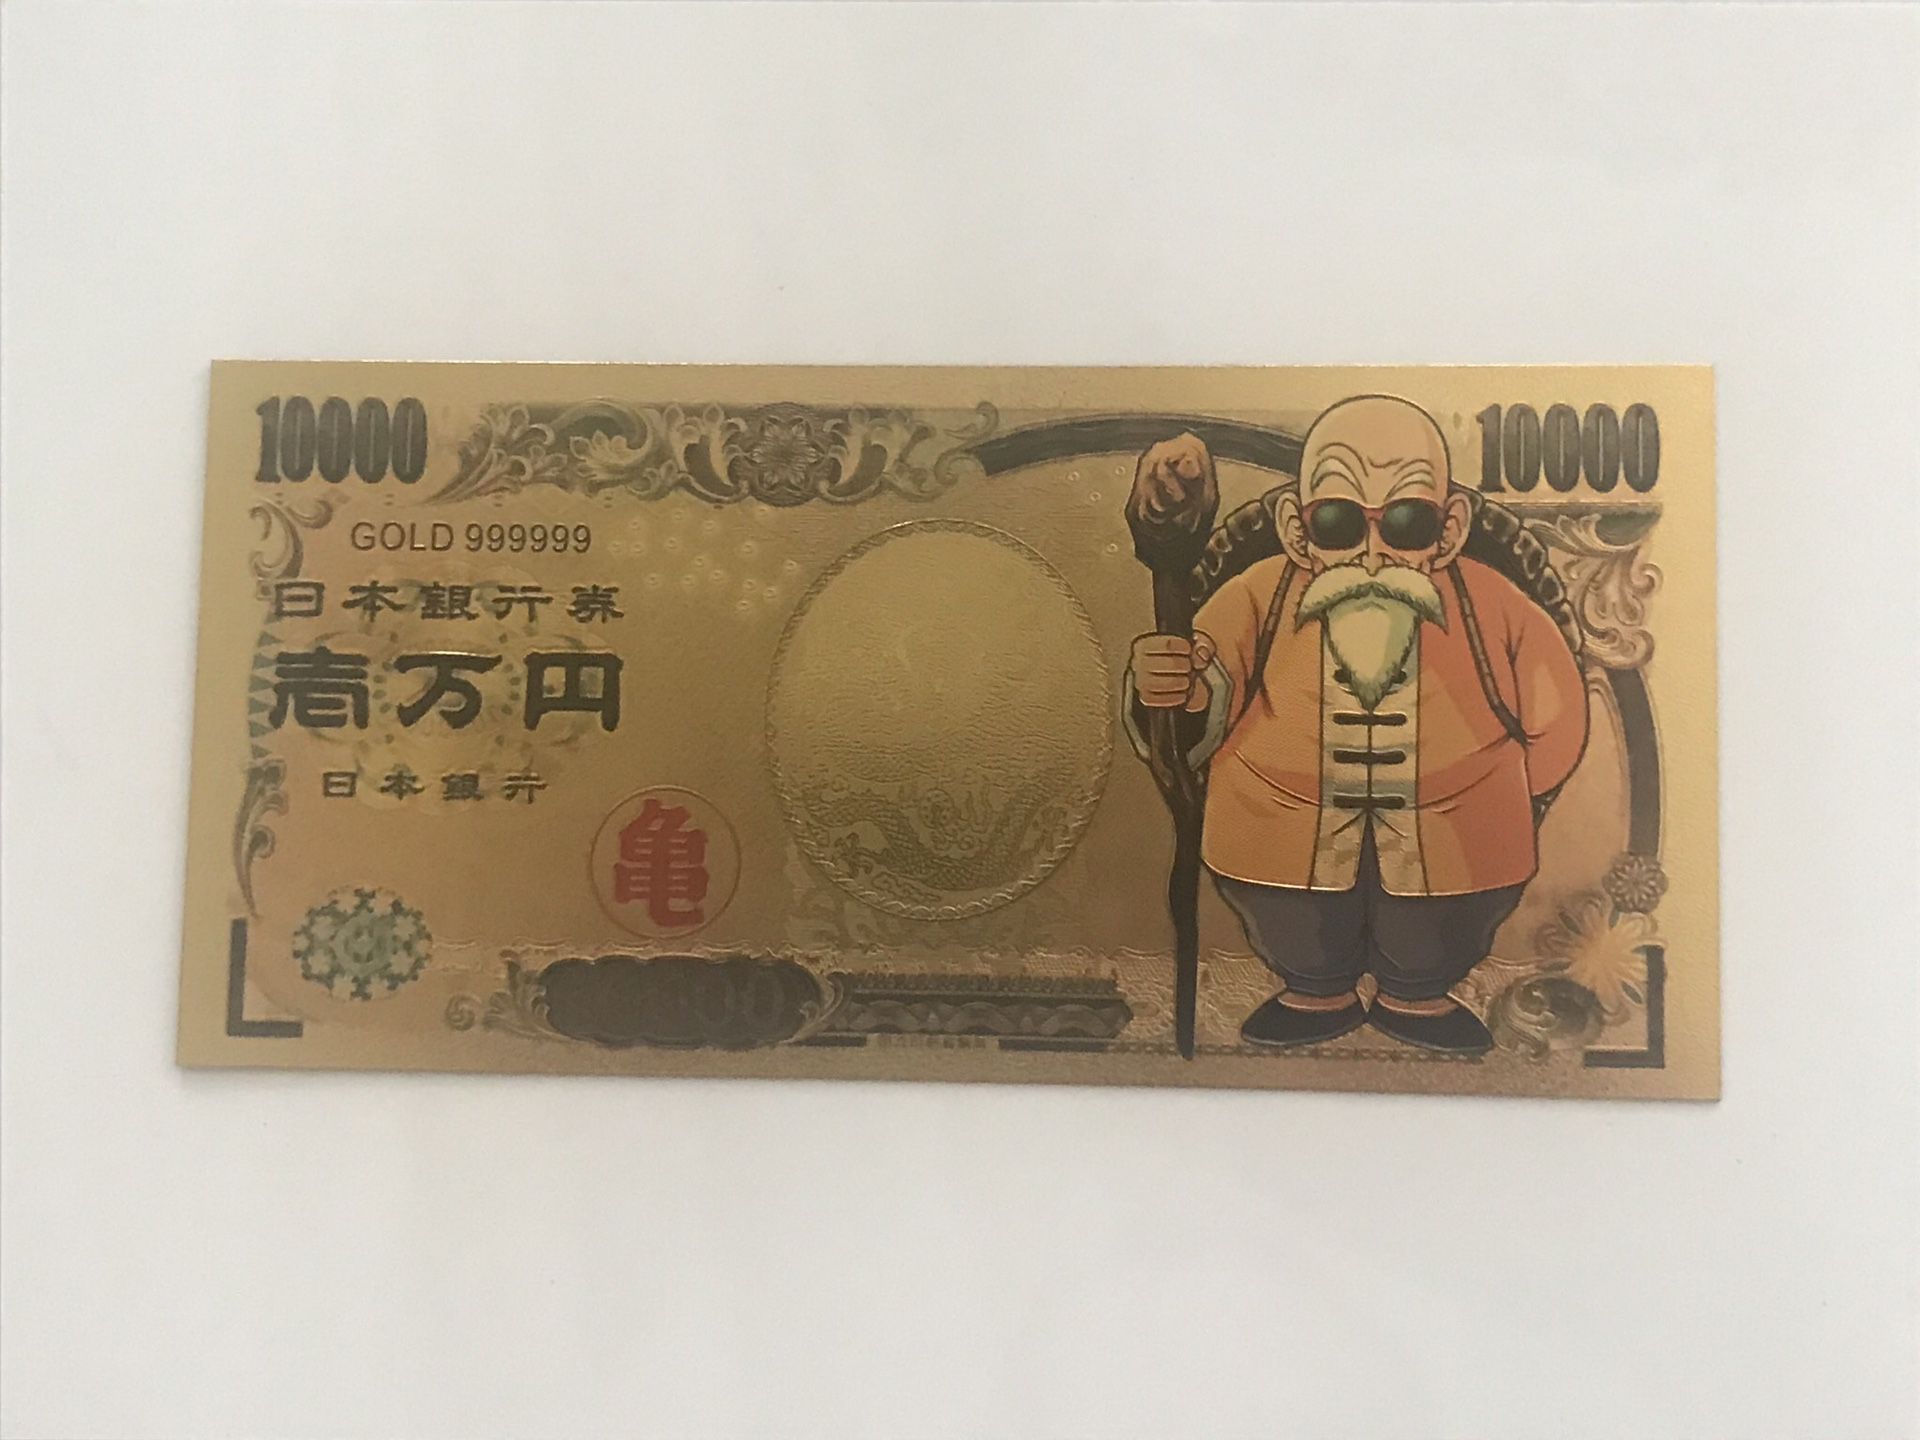 Dragonball Gold Card Money - Master Roshi